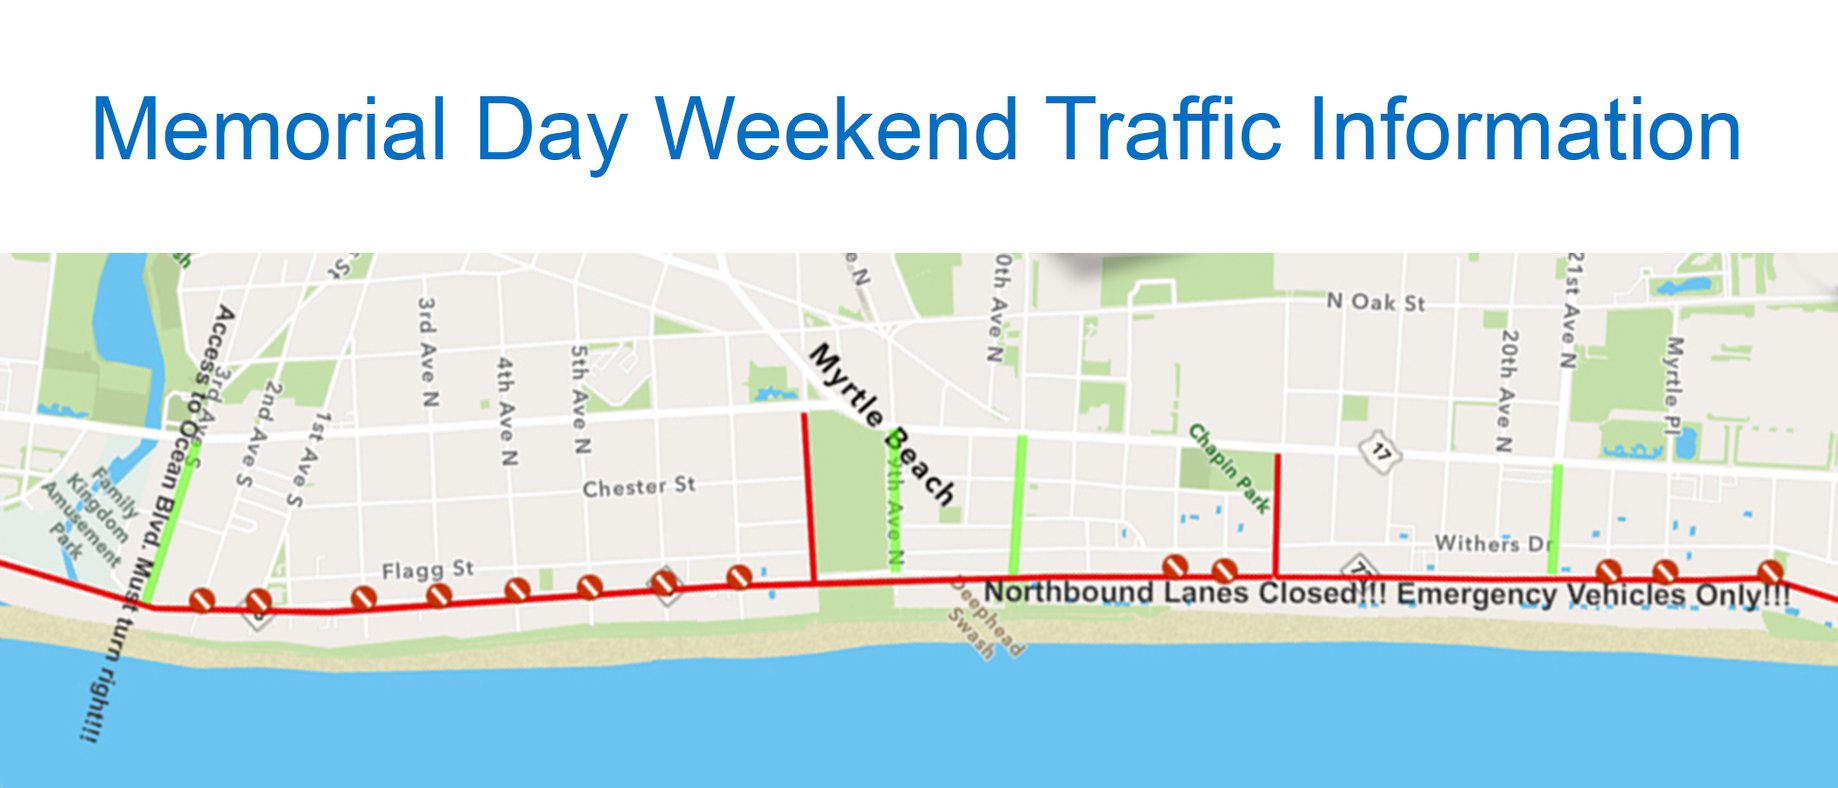 Memorial Day Weekend Traffic plan 2021